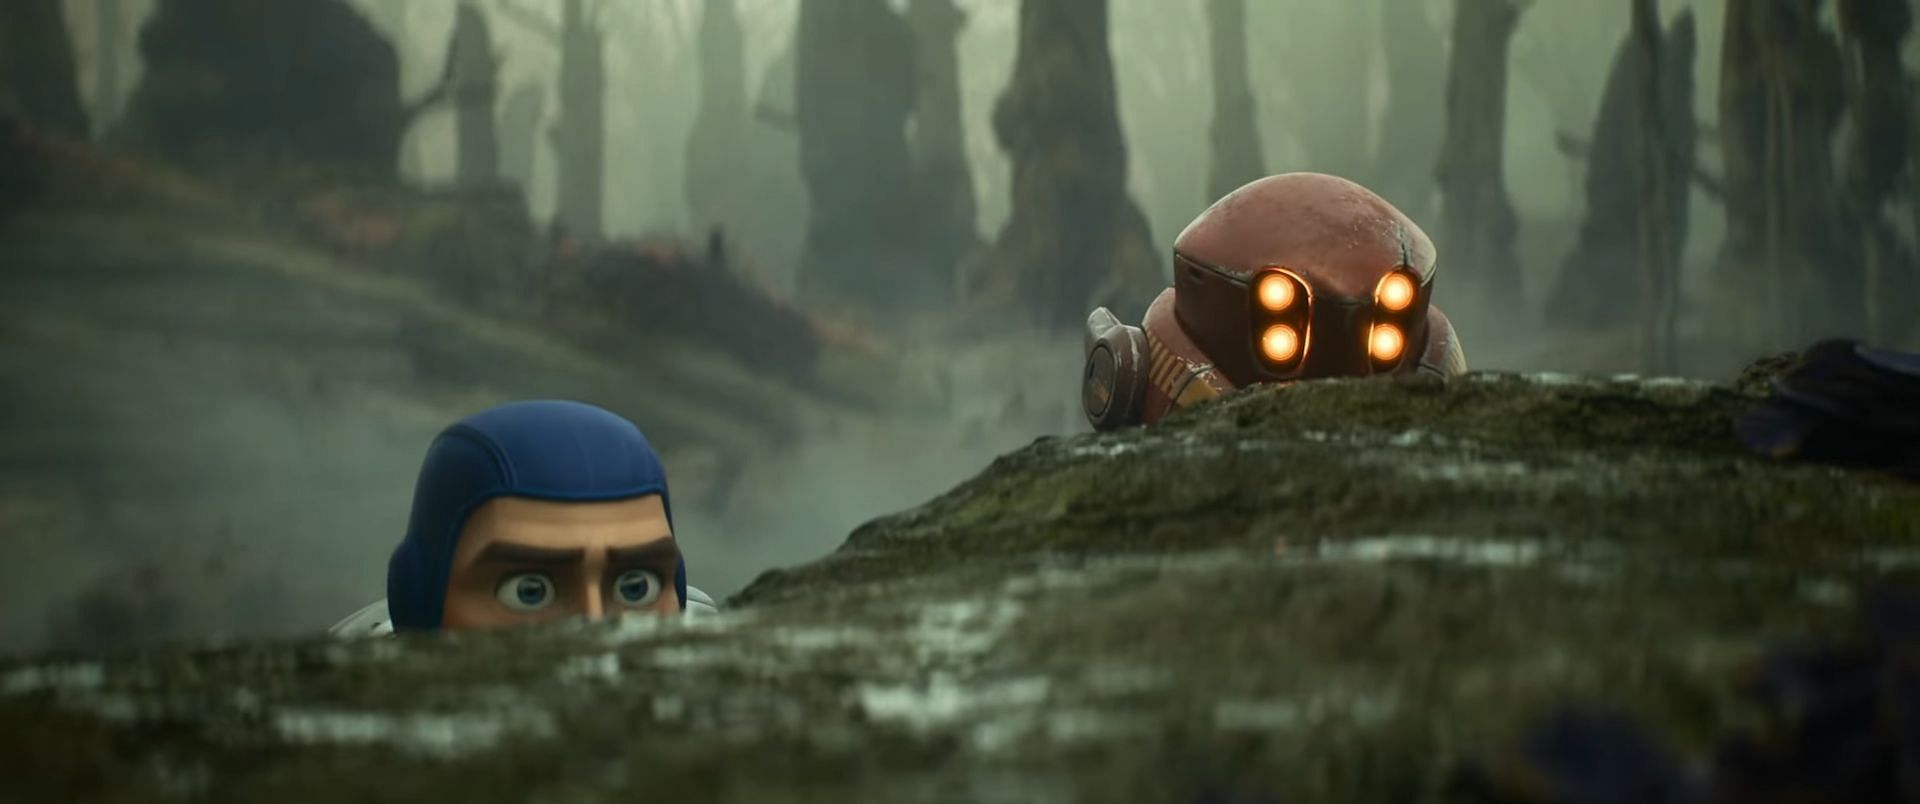 Buzz accompanied by a robot in a hyper realistic shot (Image via Disney / Pixar)